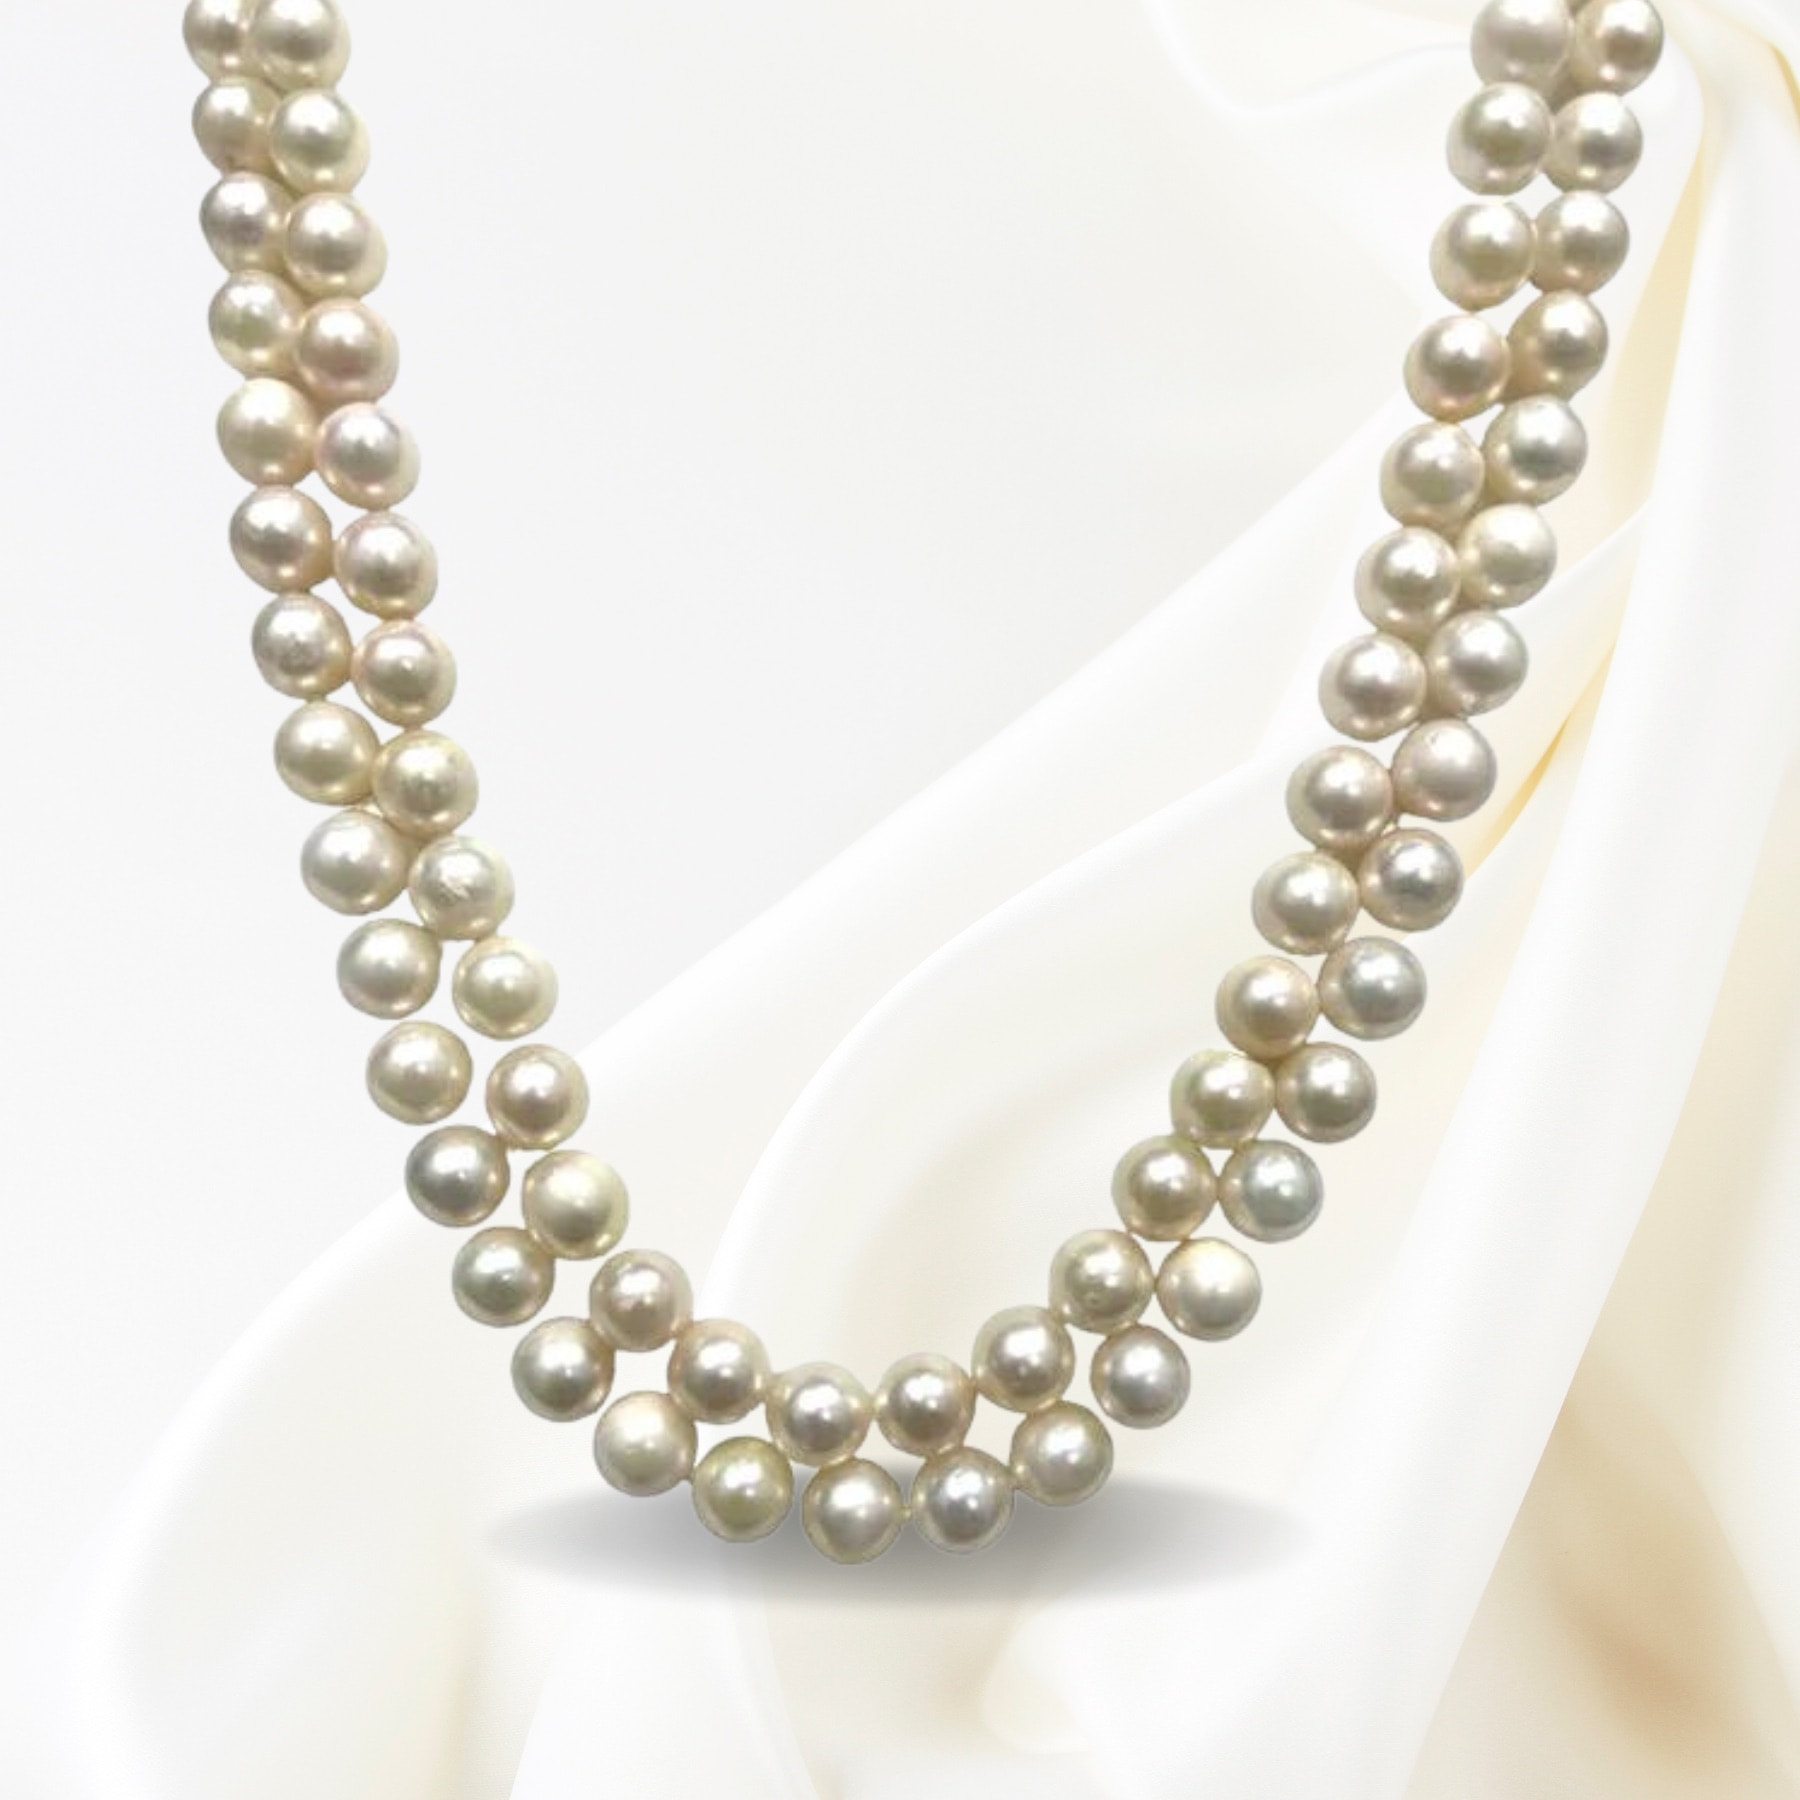 8k Gold Clasp with 13mm Pearls & Diamonds - Koosh Jewelers